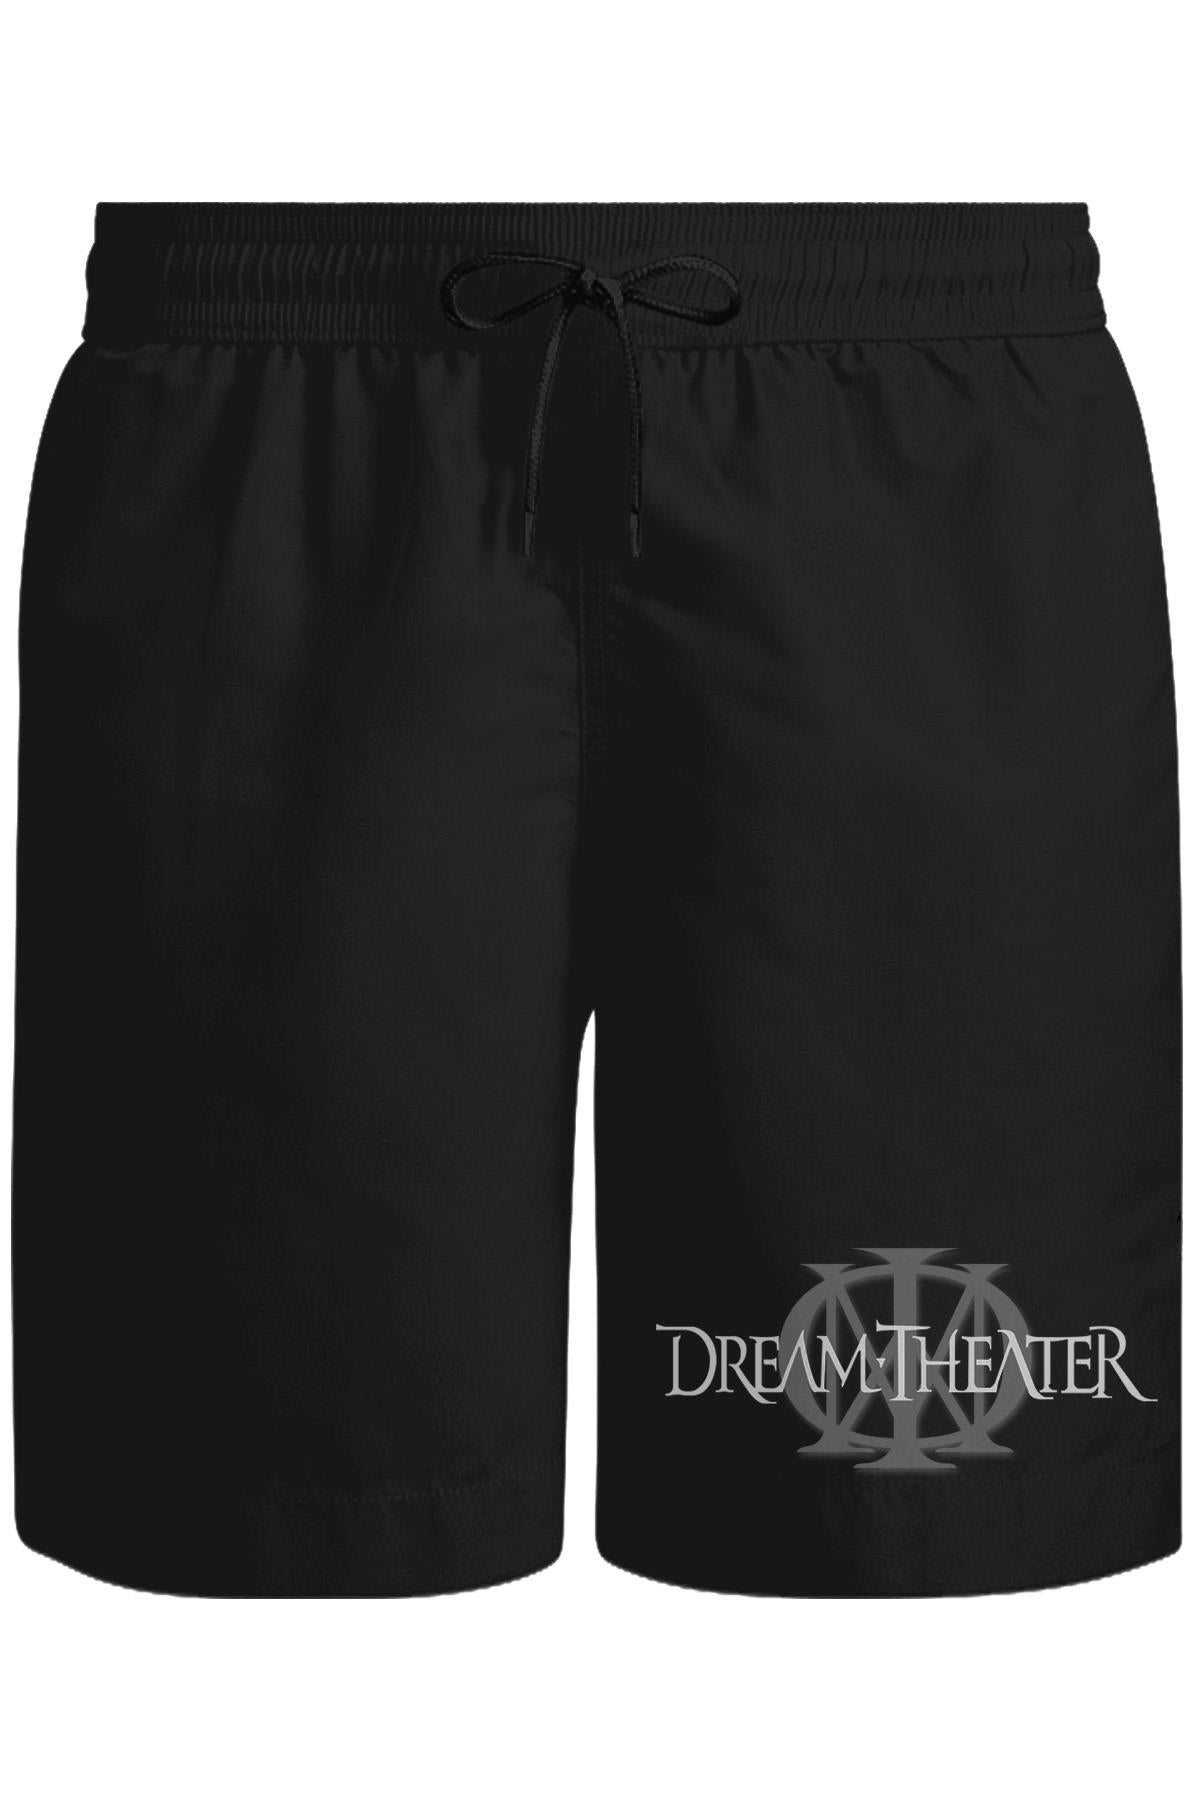 Dream Theater - Logo Unisex Siyah Şort